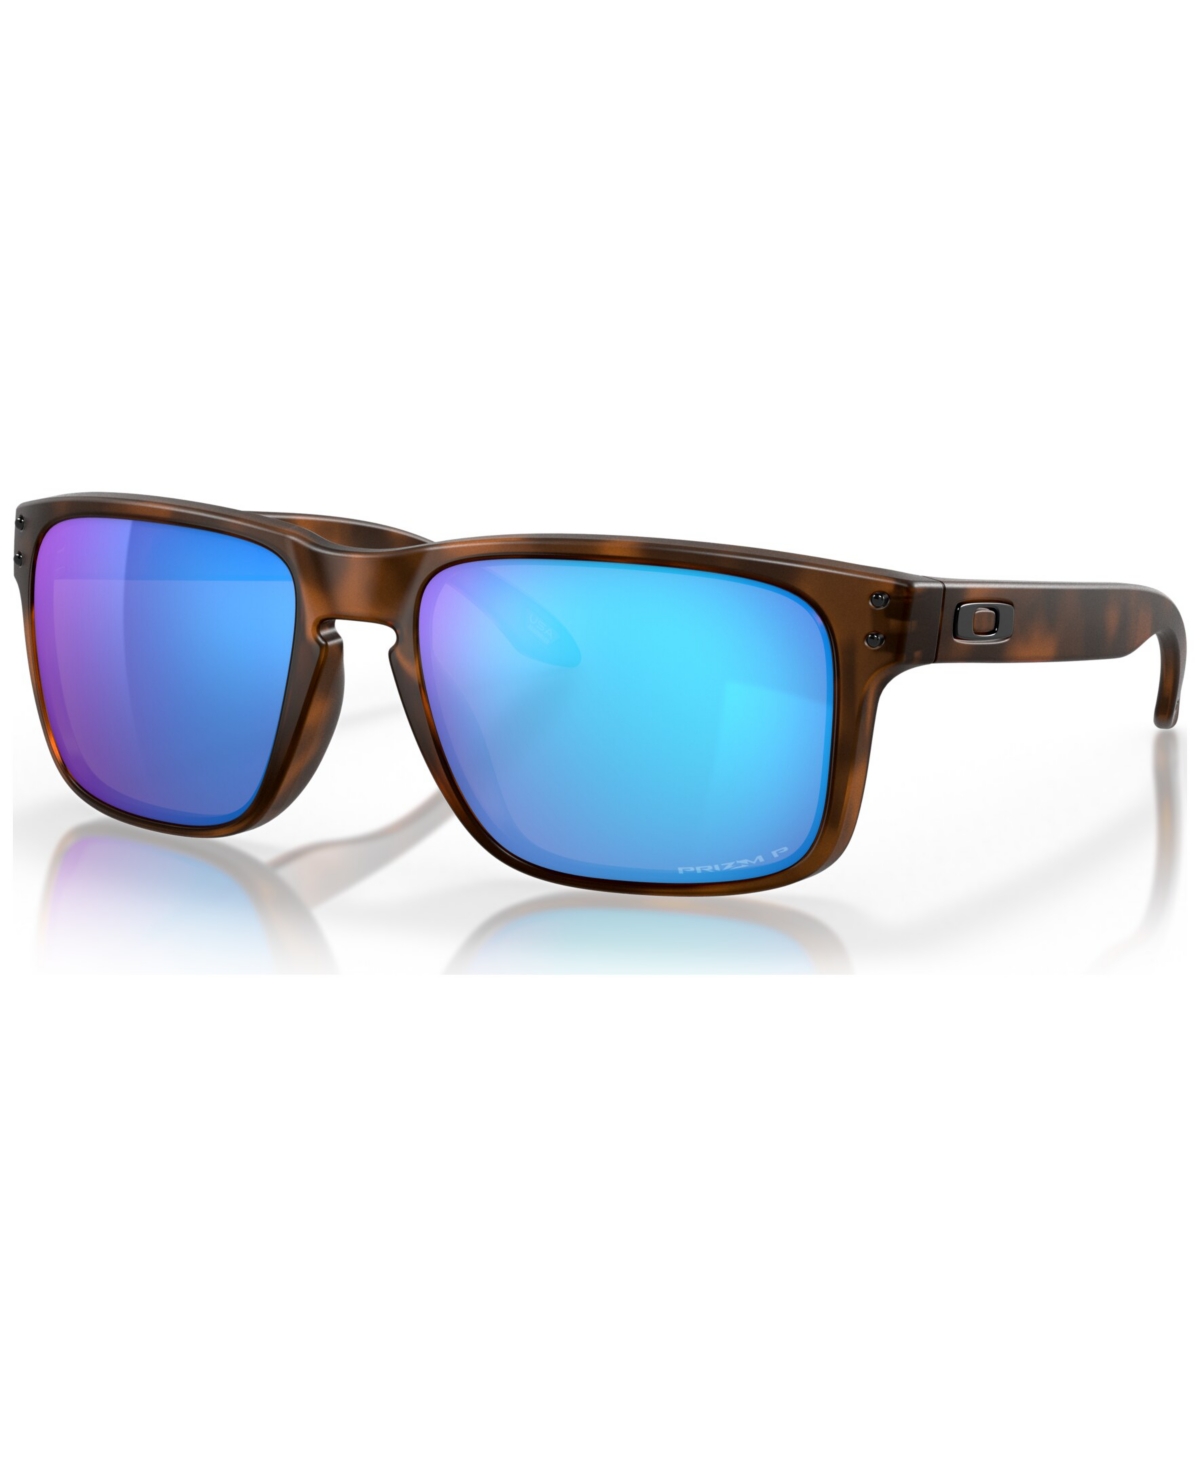 Oakley Men's Polarized Prizm Sunglasses, Oo9102 Holbrook In Matte Brown Tortoise